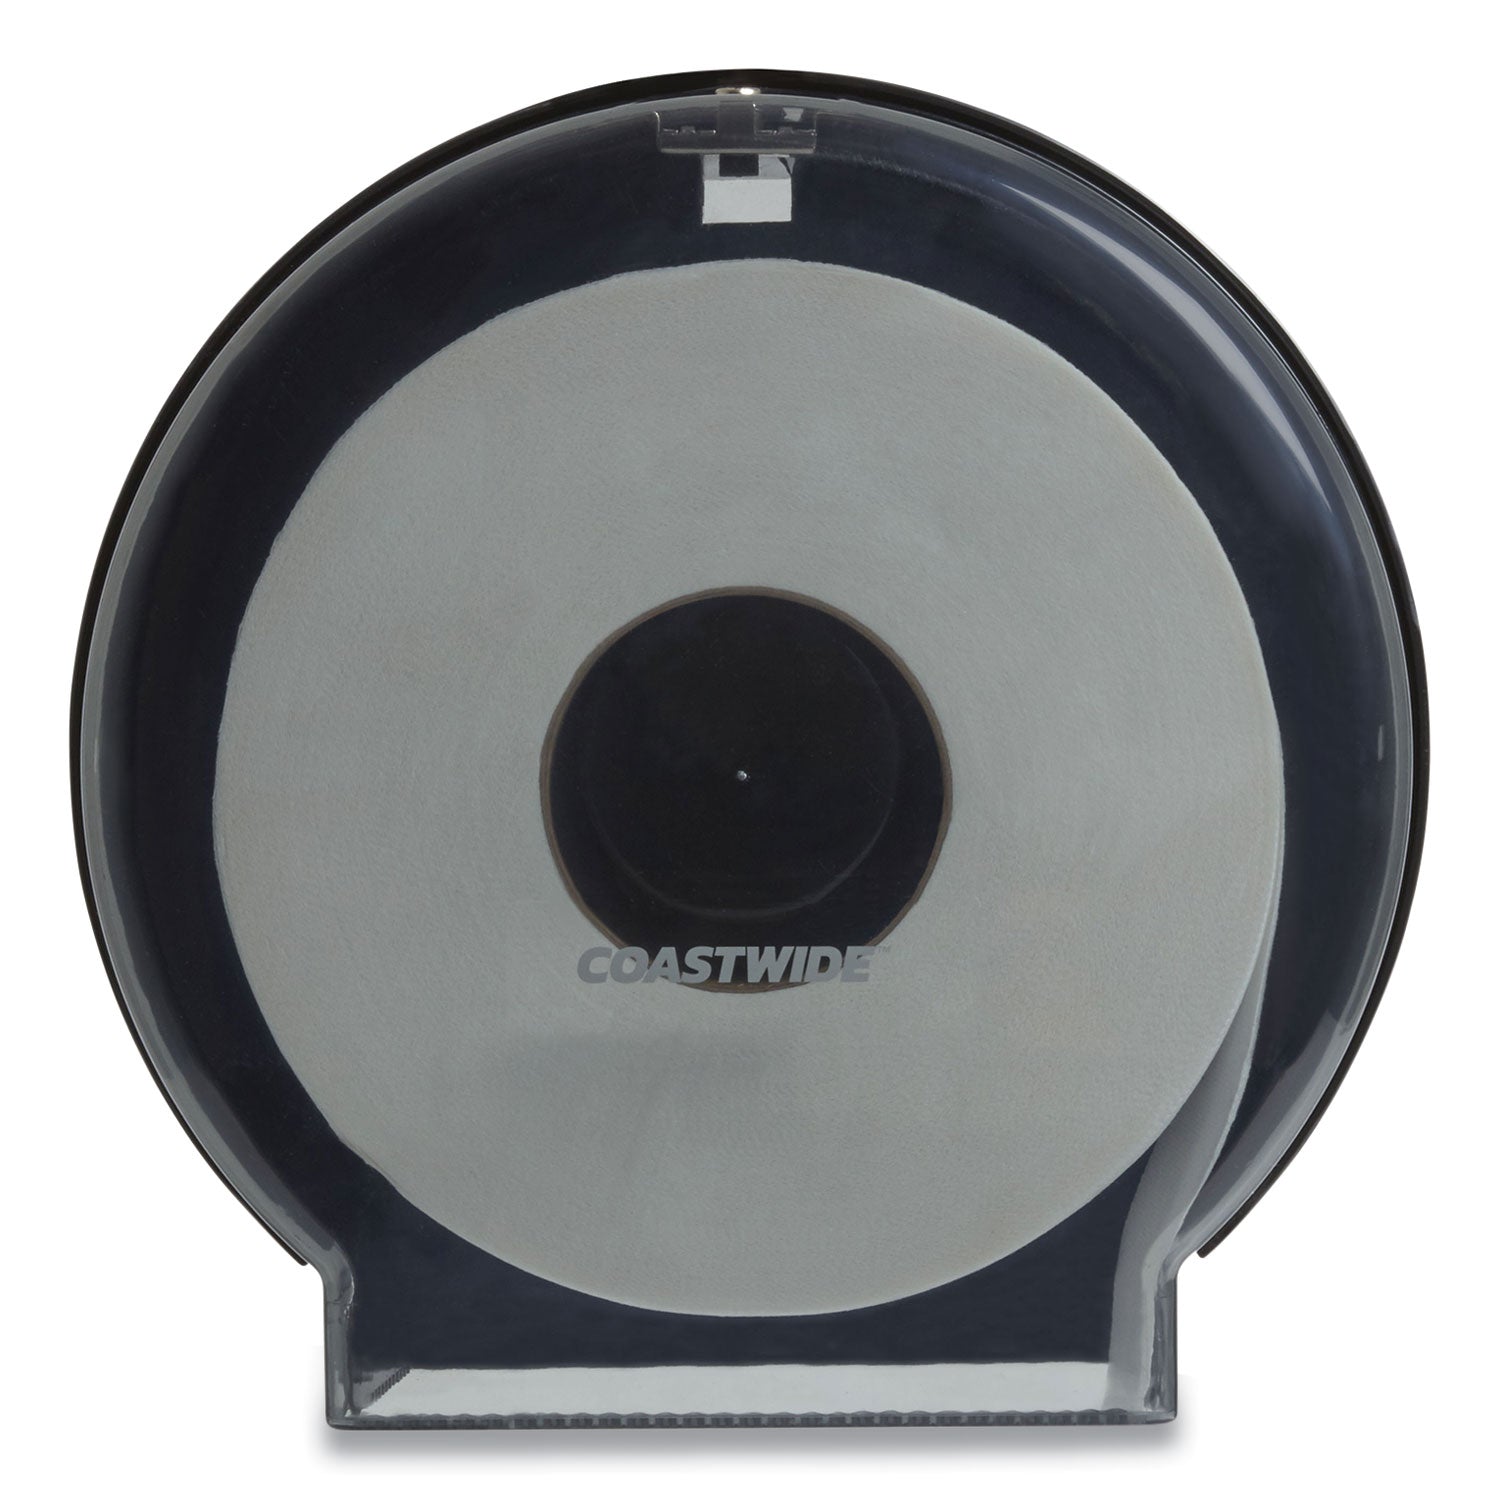 jumbo-roll-toilet-paper-dispenser-1188-x-513-x-11-translucent-smoke_cwz376447 - 1